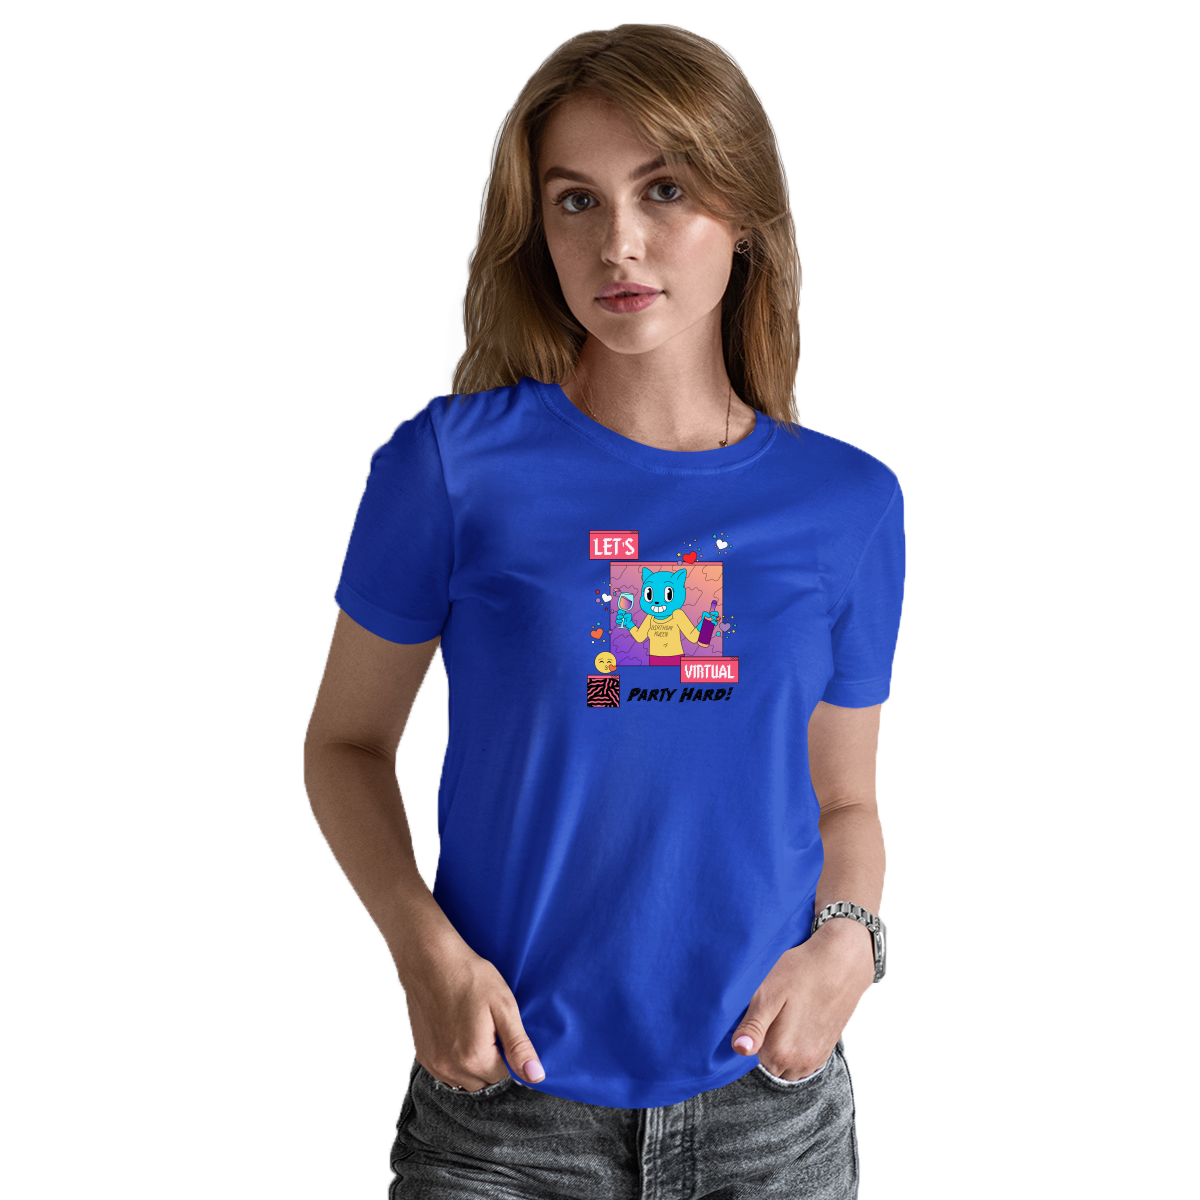 Let's Virtual Party Hard Women's T-shirt | Blue